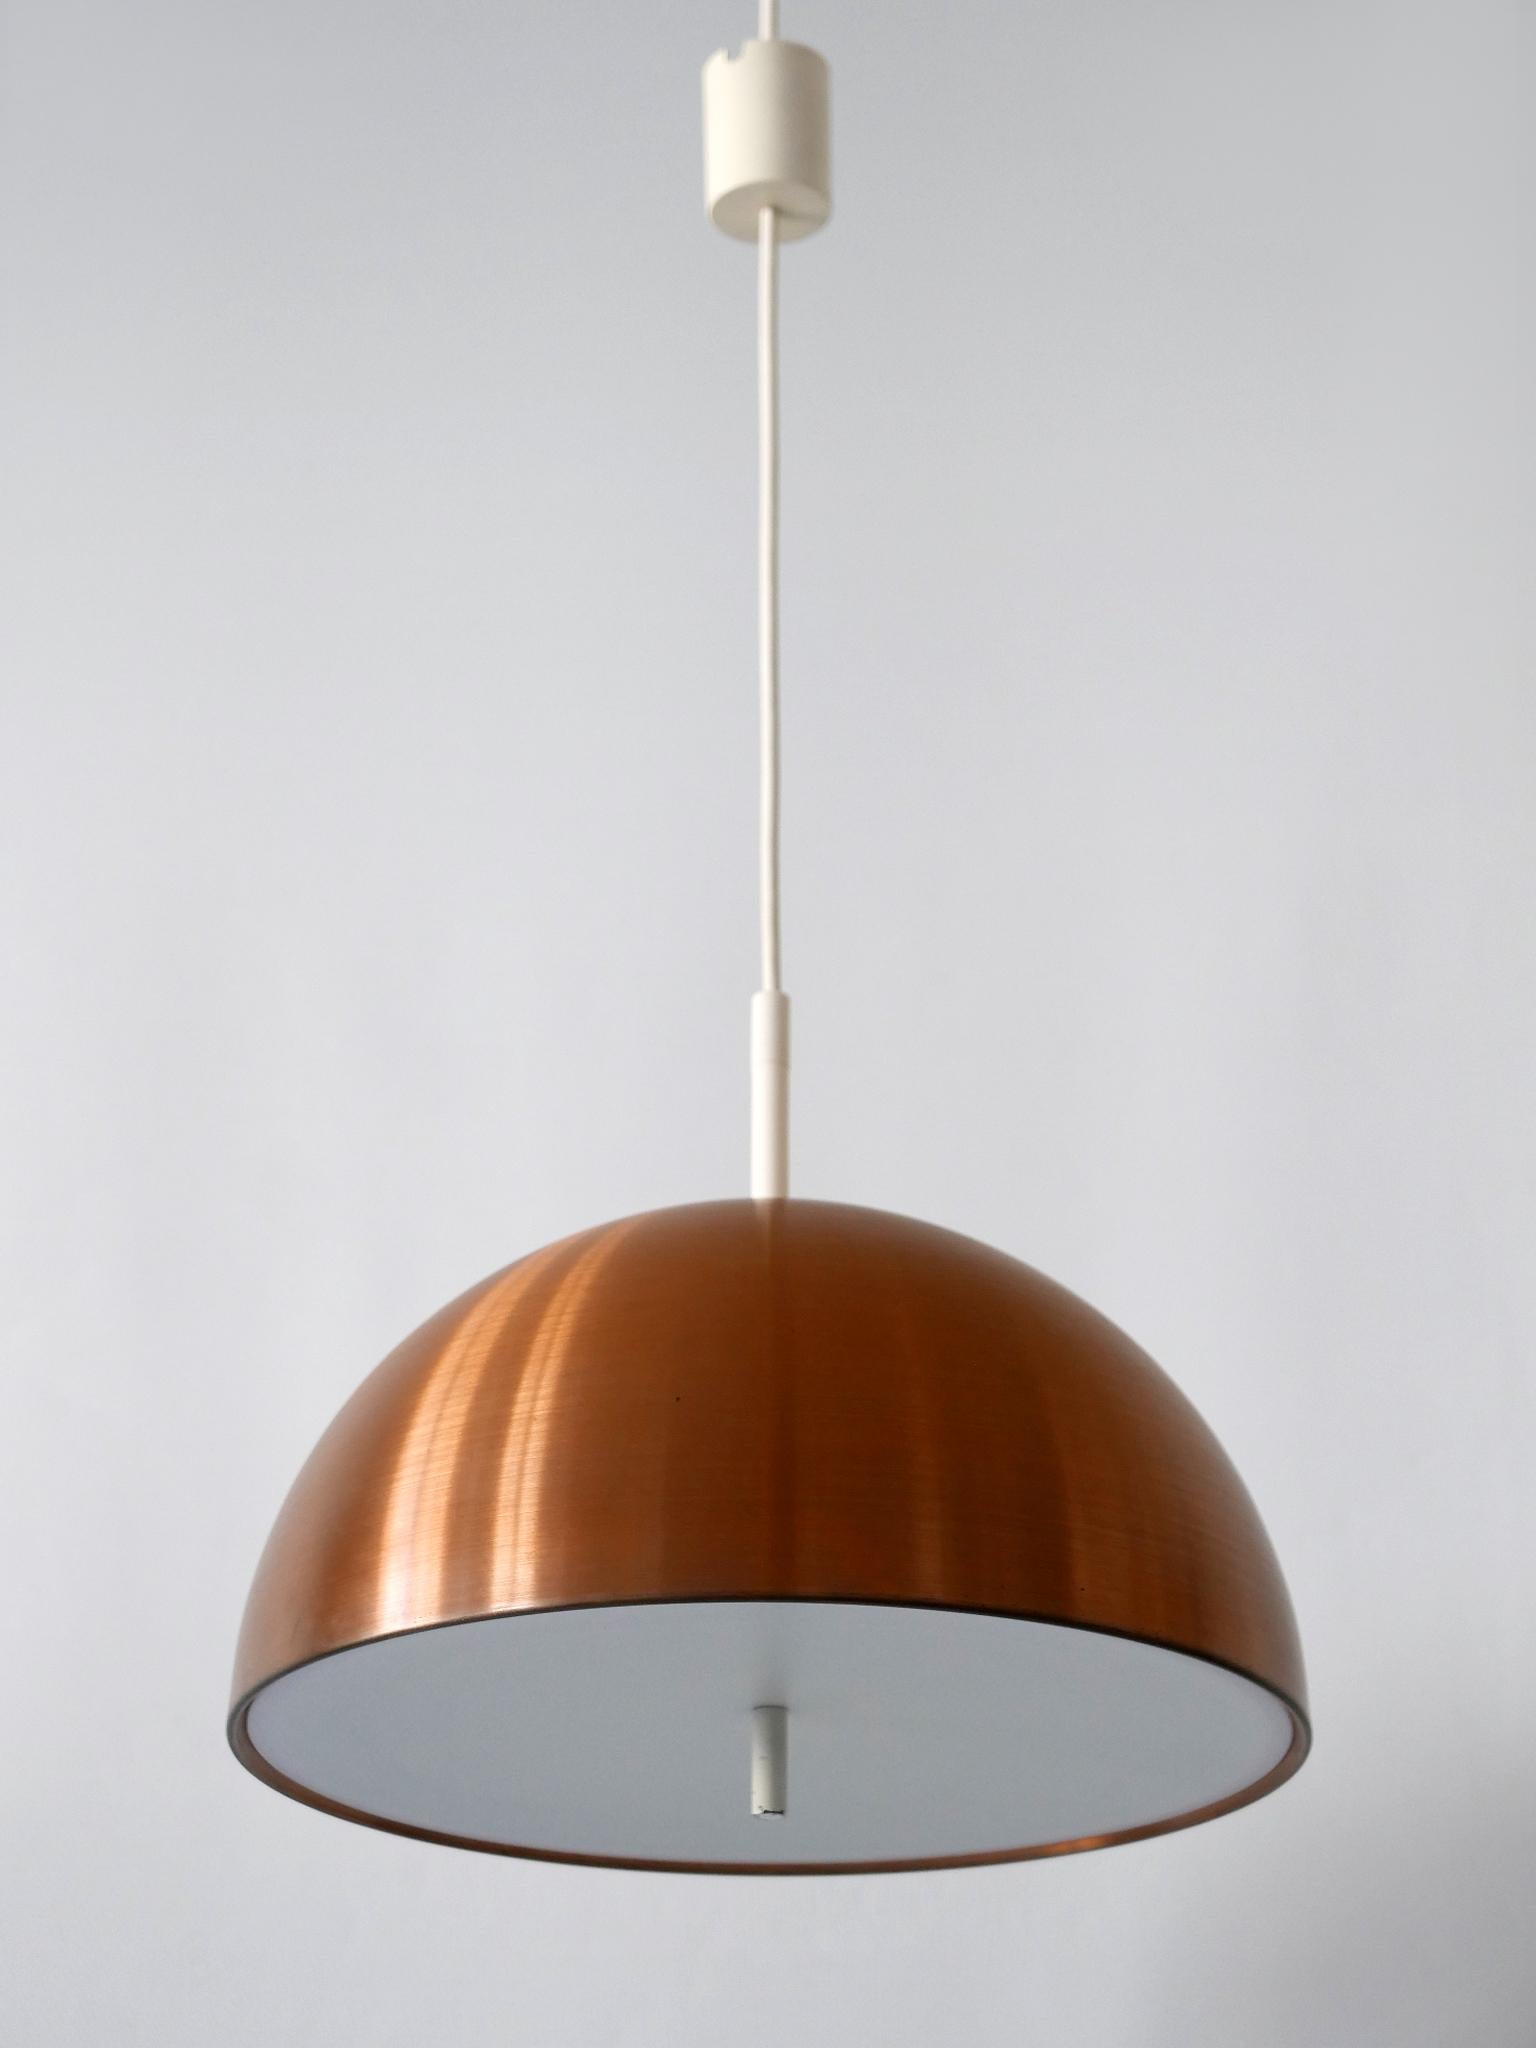 Elegant Mid-Century Modern Copper Pendant Lamp by Staff & Schwarz Germany, 1960s For Sale 8